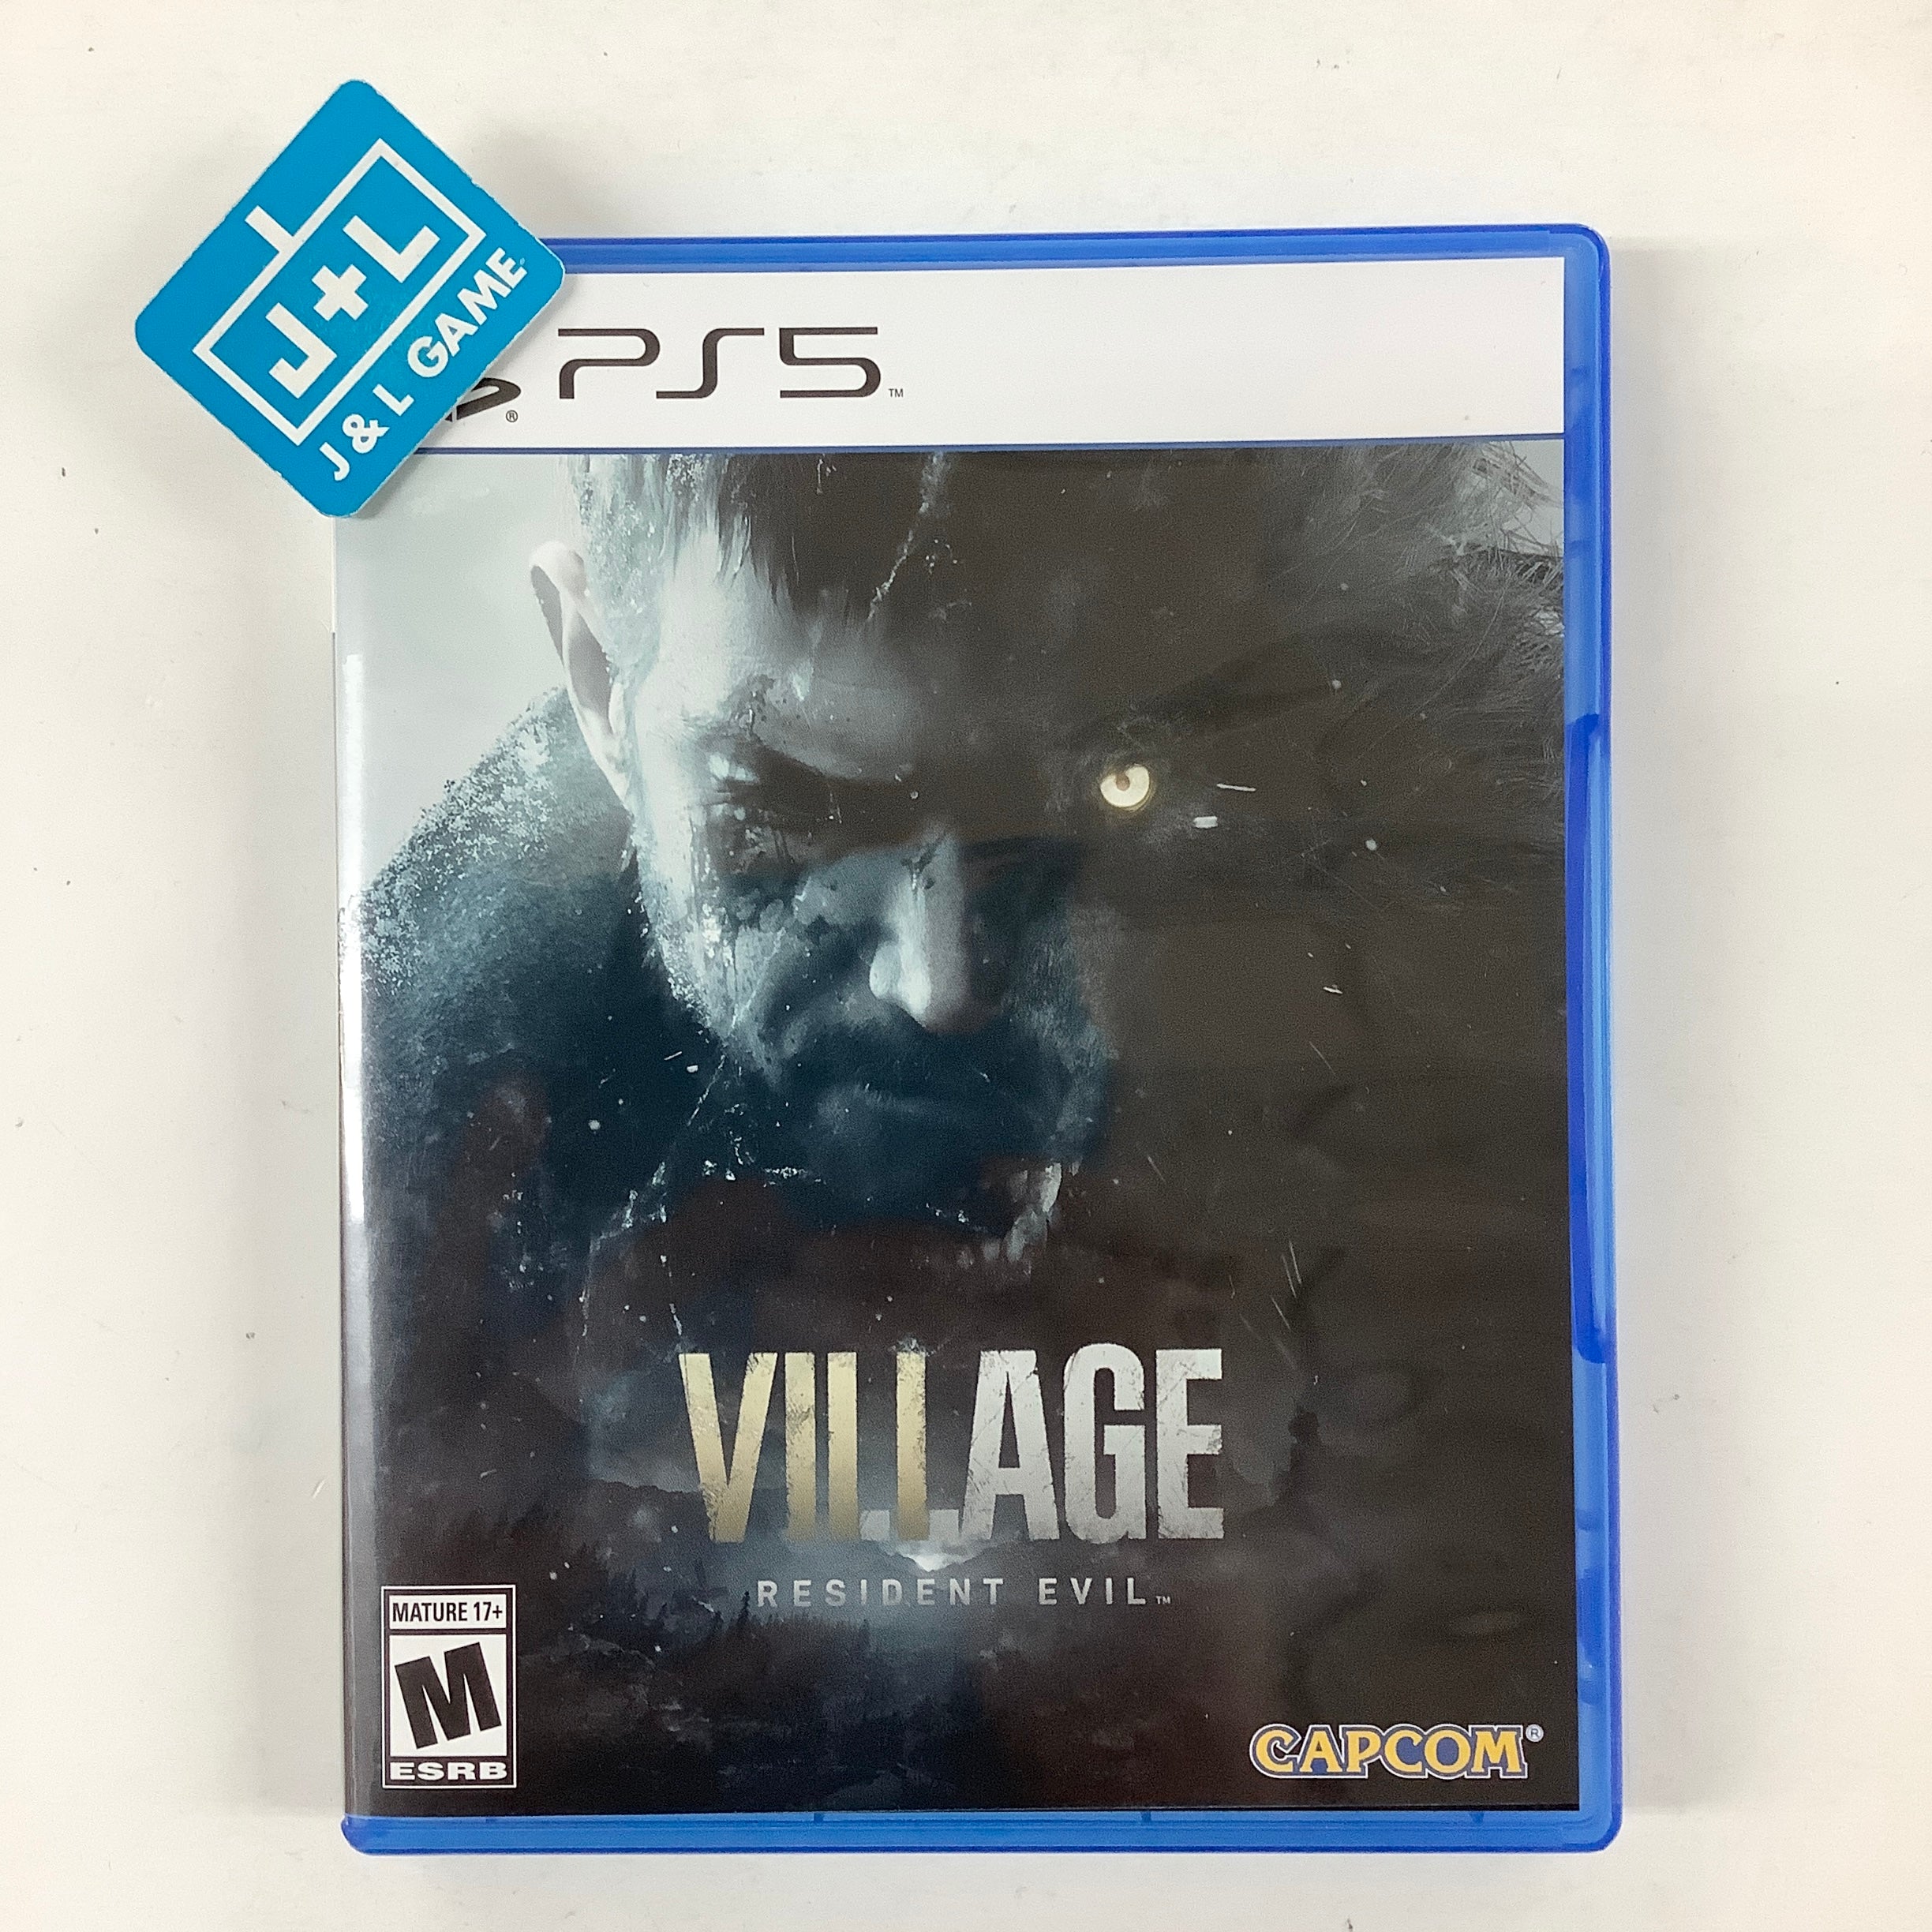 Resident Evil Village - (PS5) PlayStation 5 [UNBOXING] Video Games Capcom   